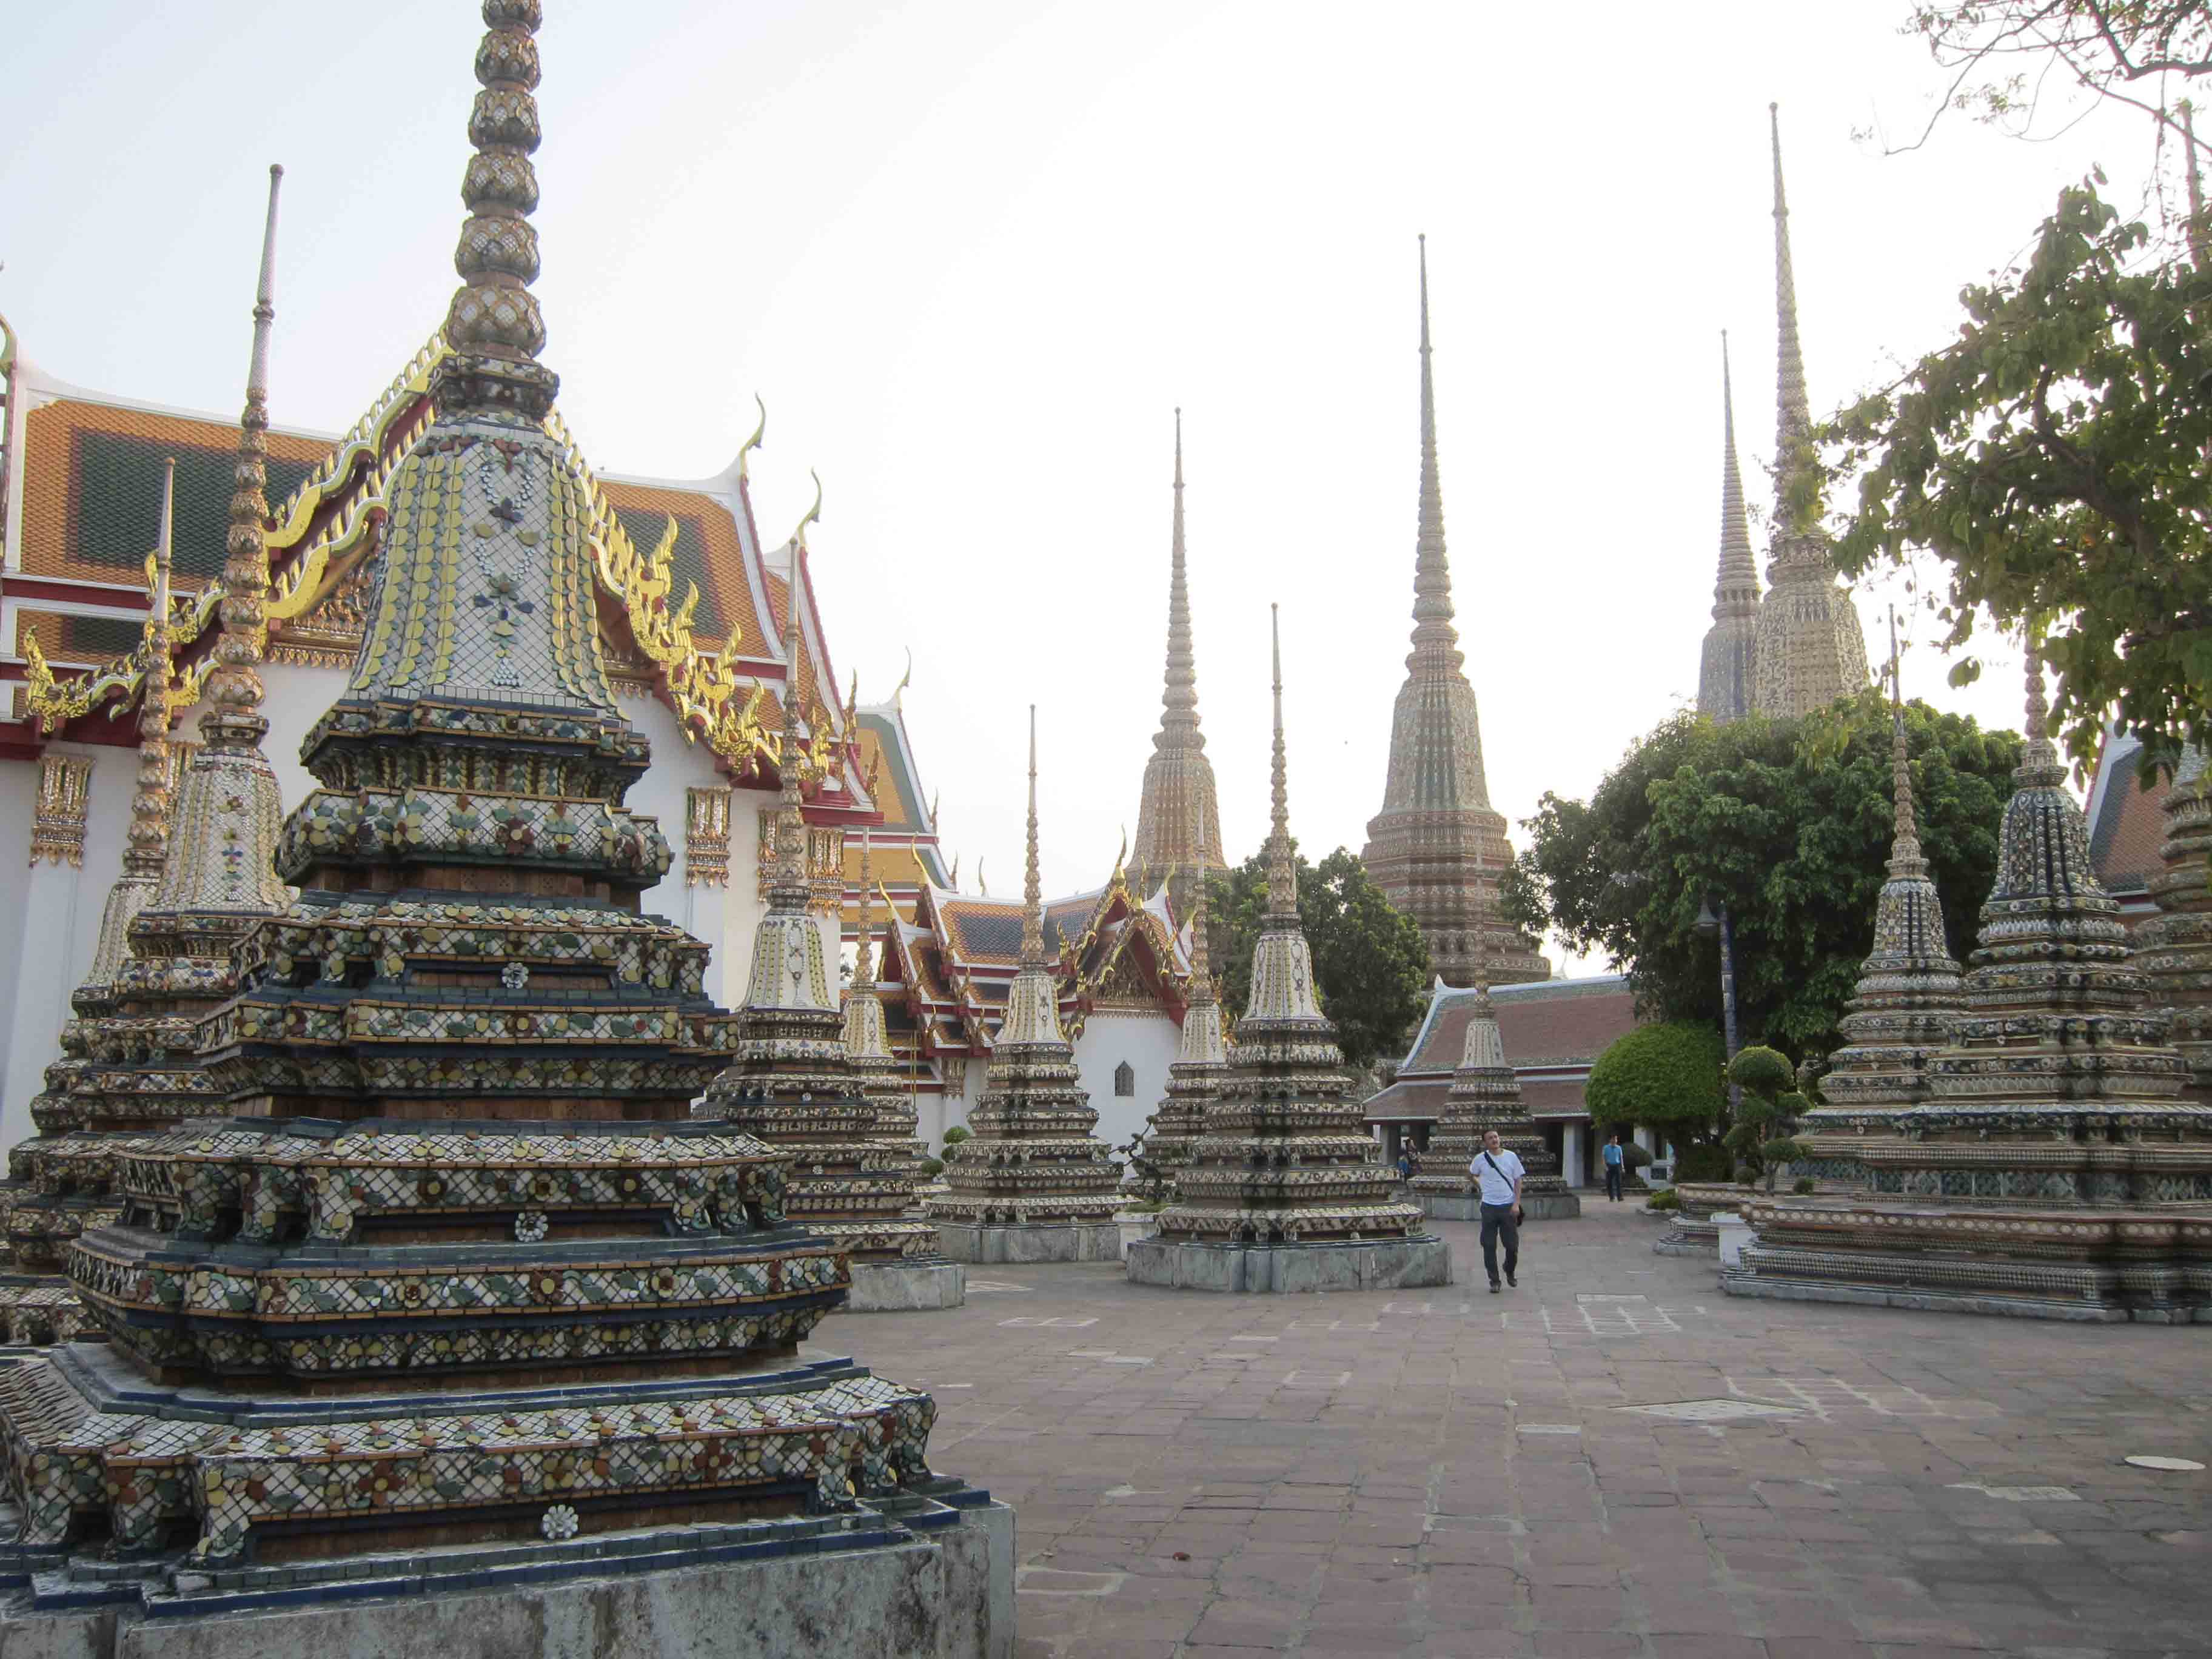 Alentours-du-Wat-Pho-Bangkok-Thailande.jpg